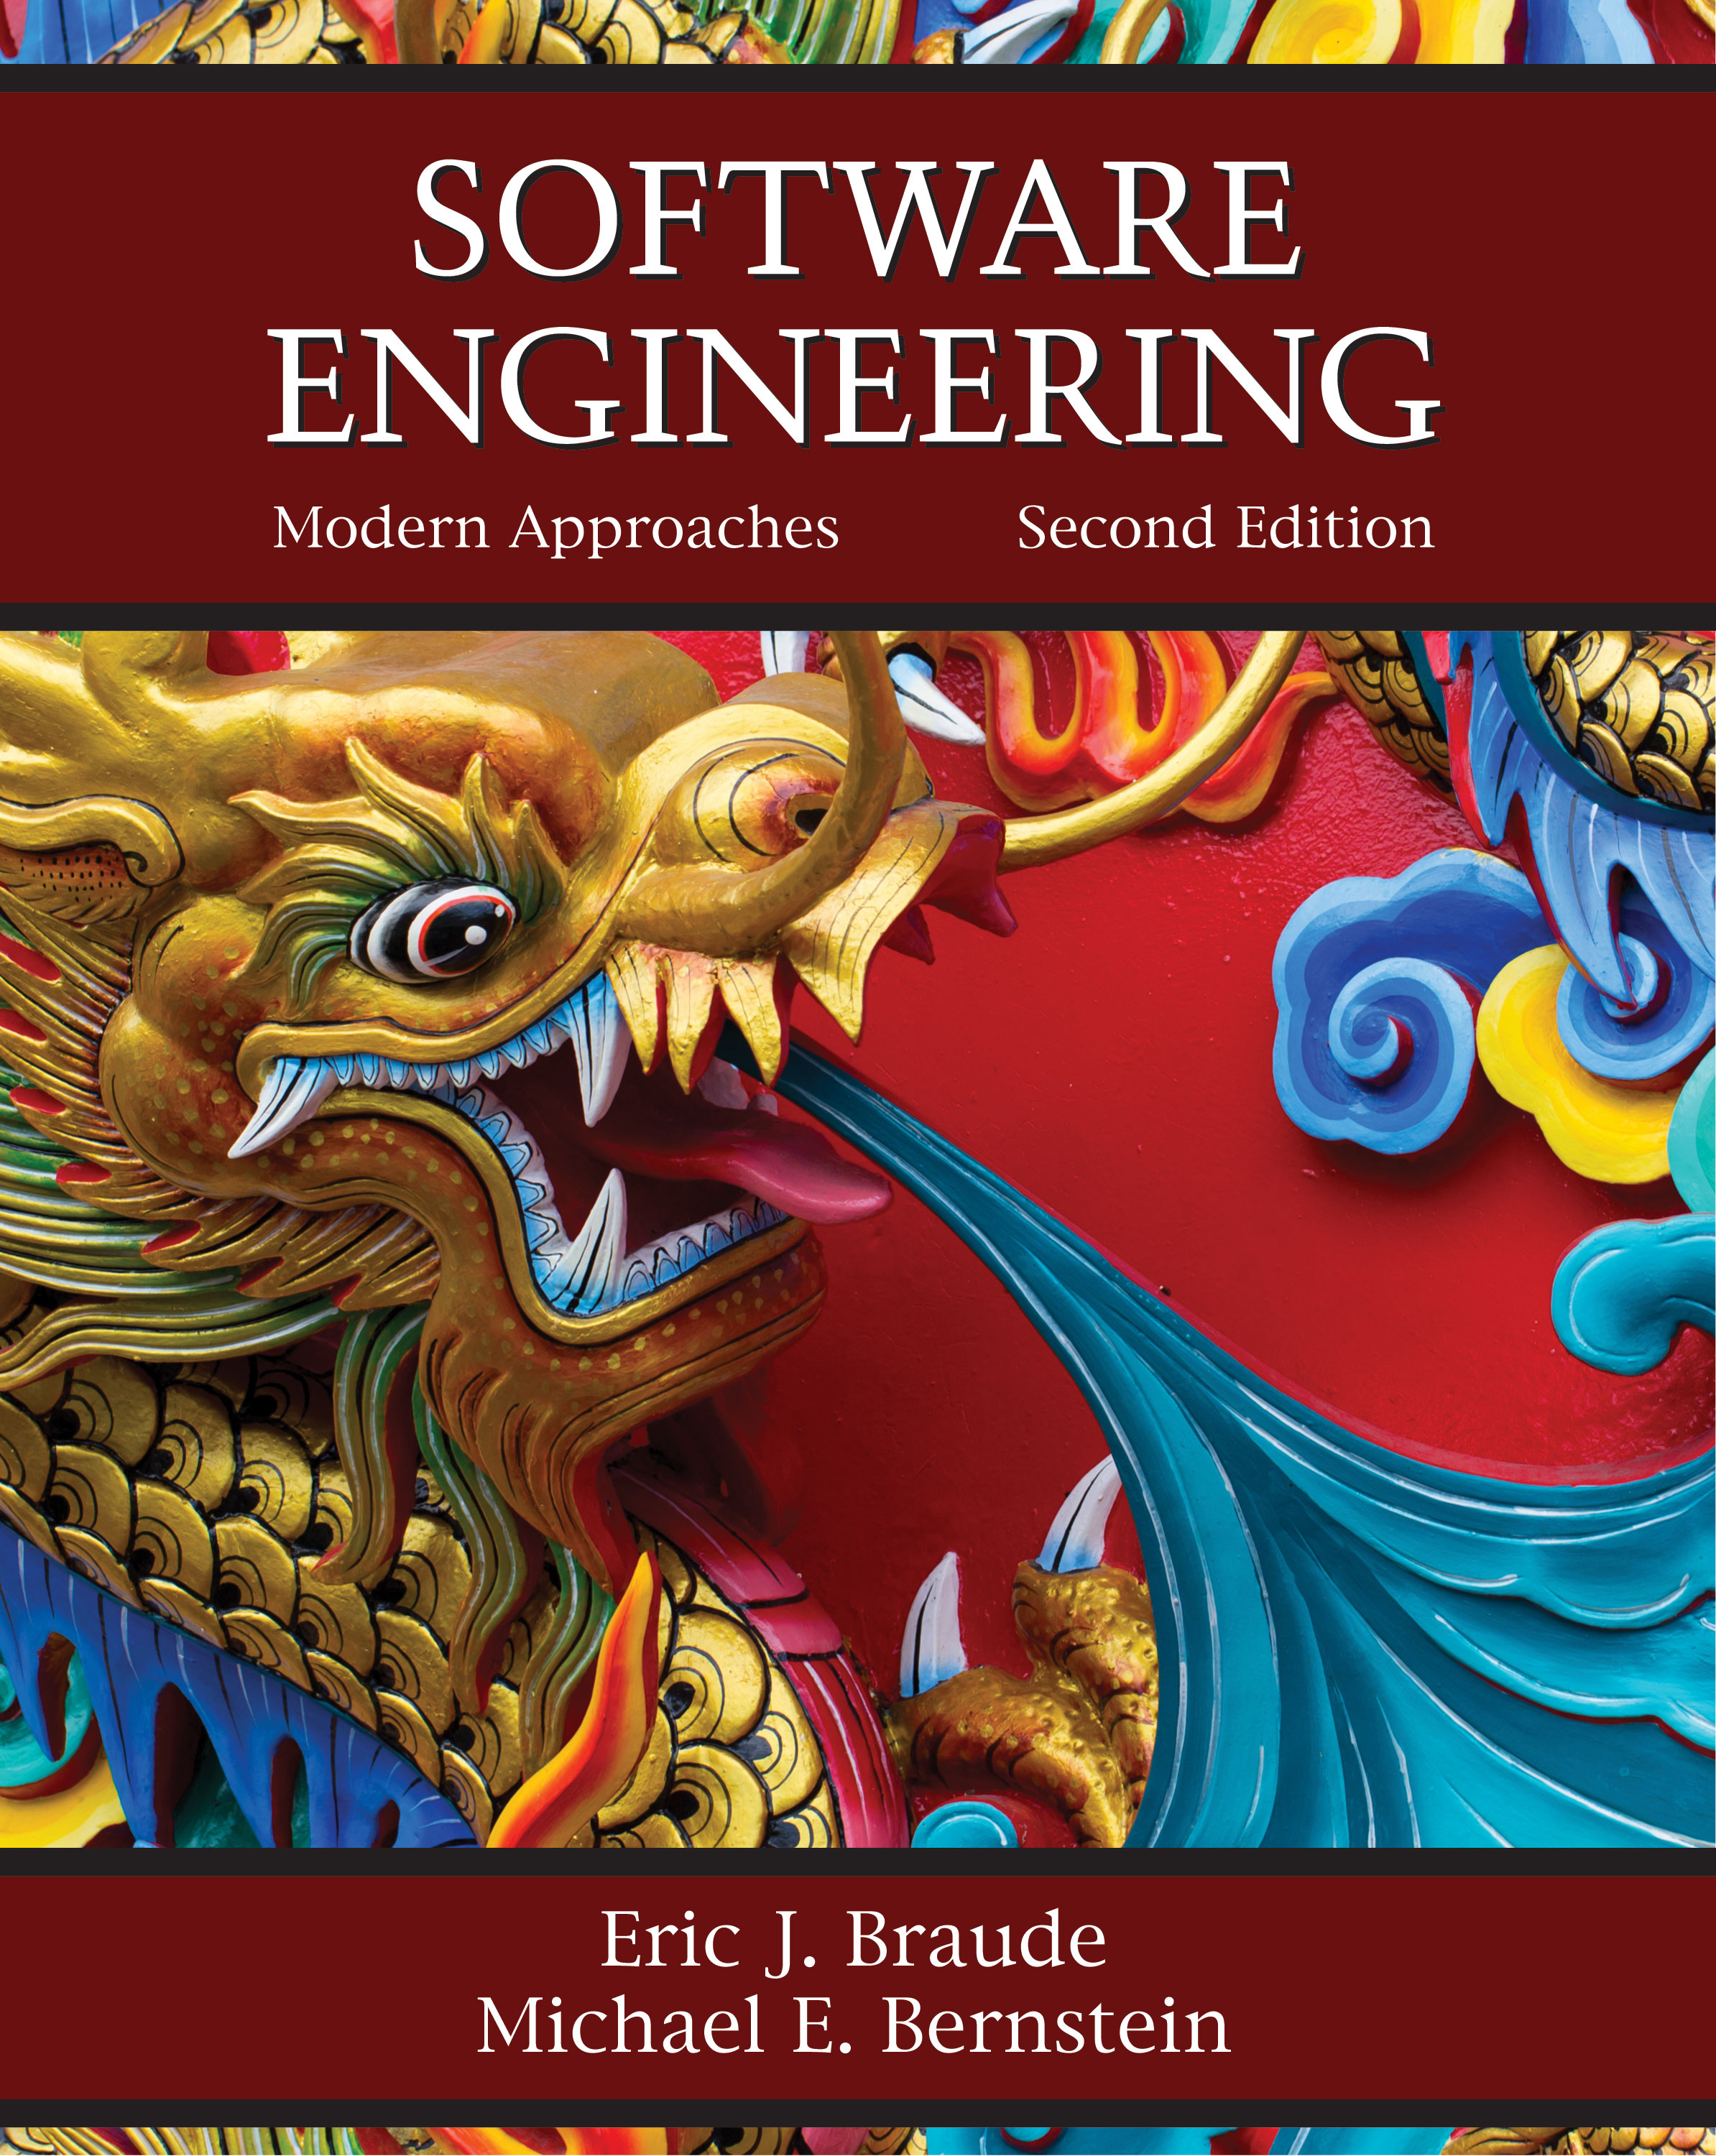 Software Engineering: Modern Approaches, Second Edition by Eric J. Braude, Michael E. Bernstein